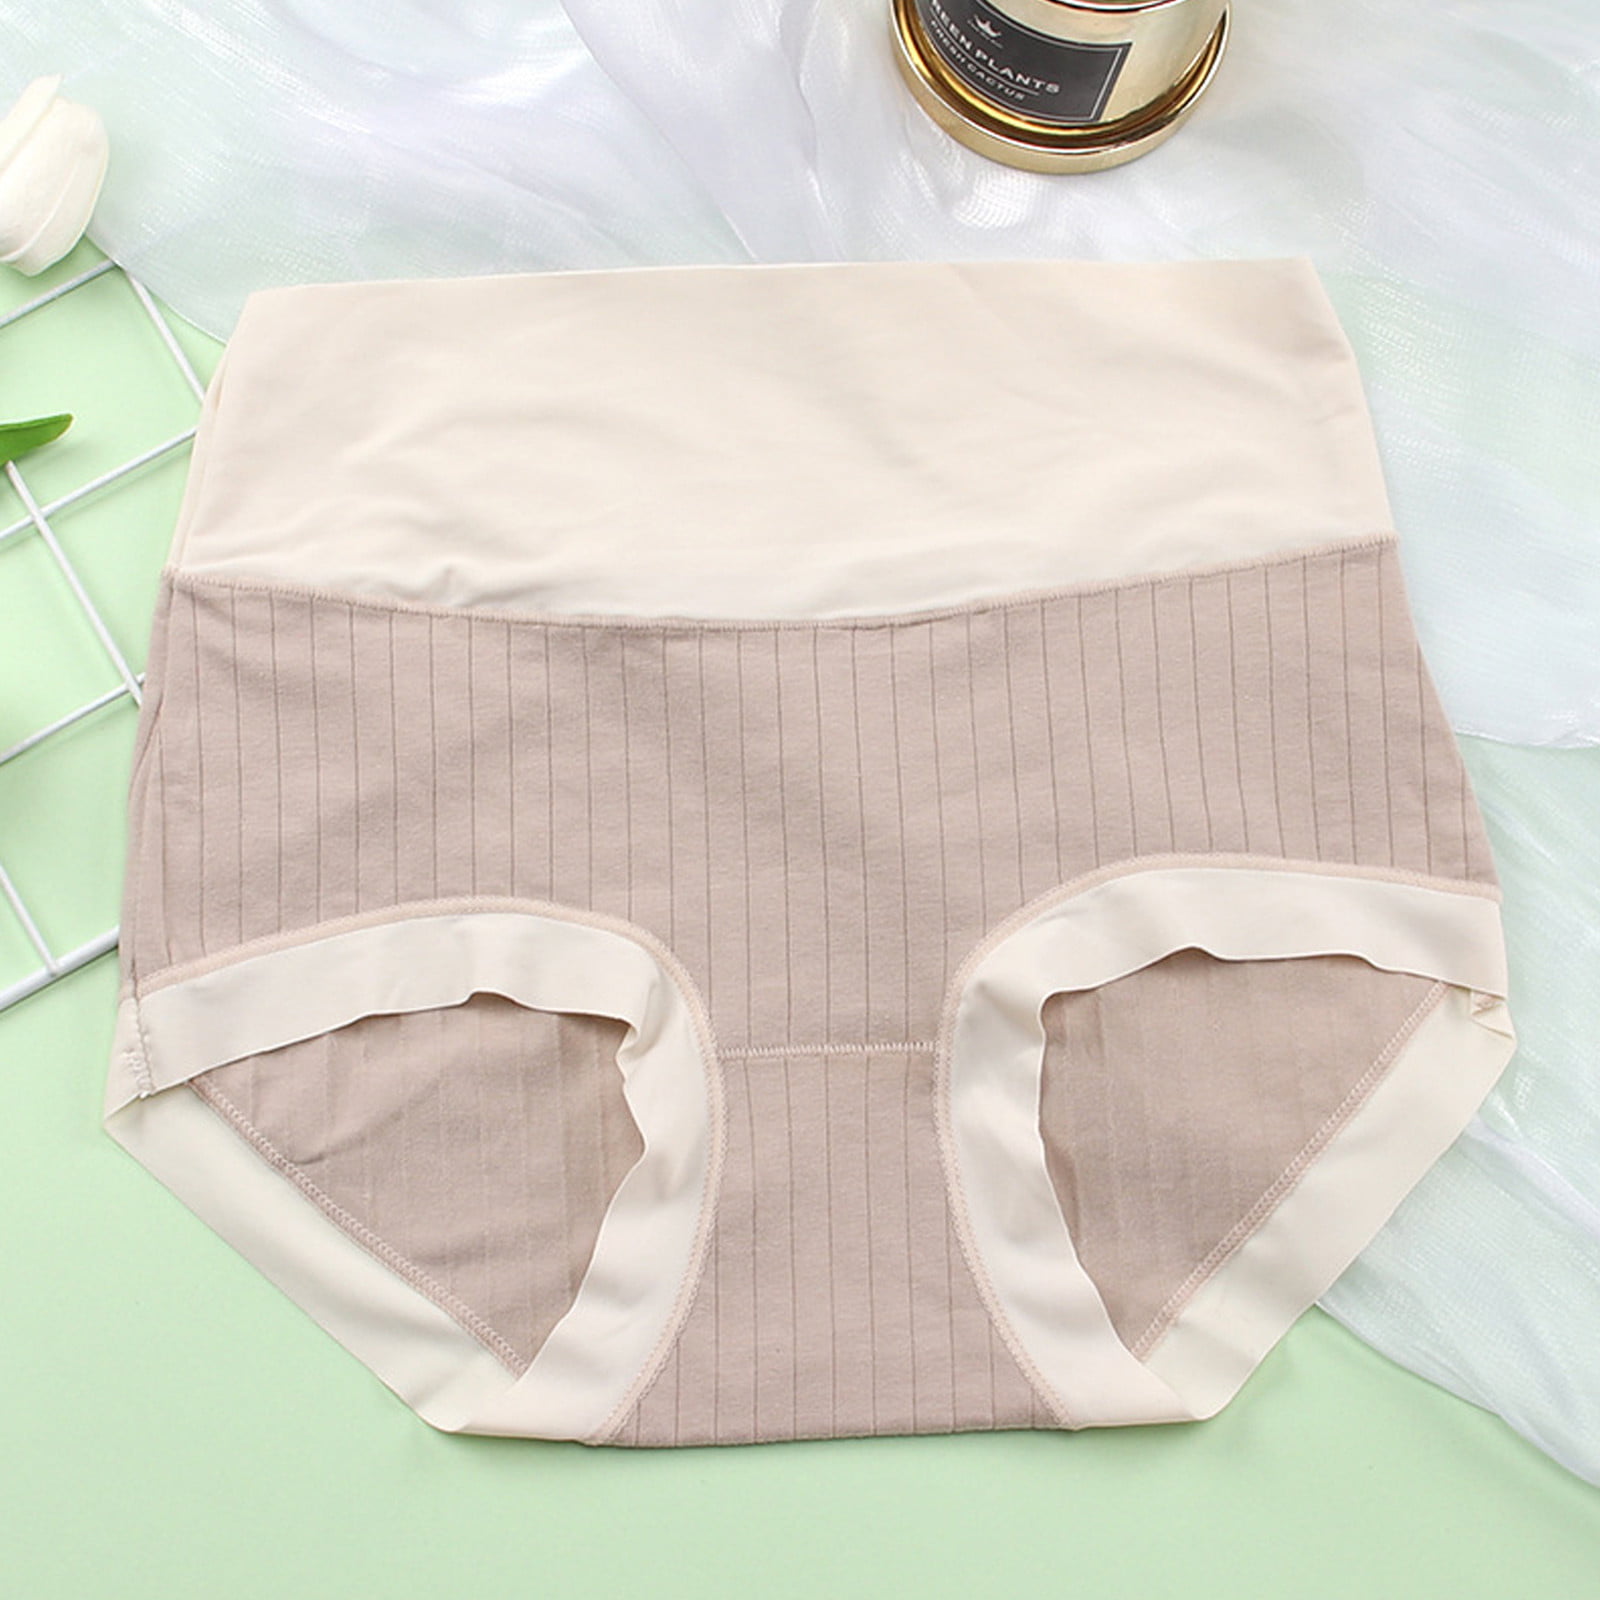 CLZOUD Workout Underwear for Women 95% Cotton 5% Spandex Gift for